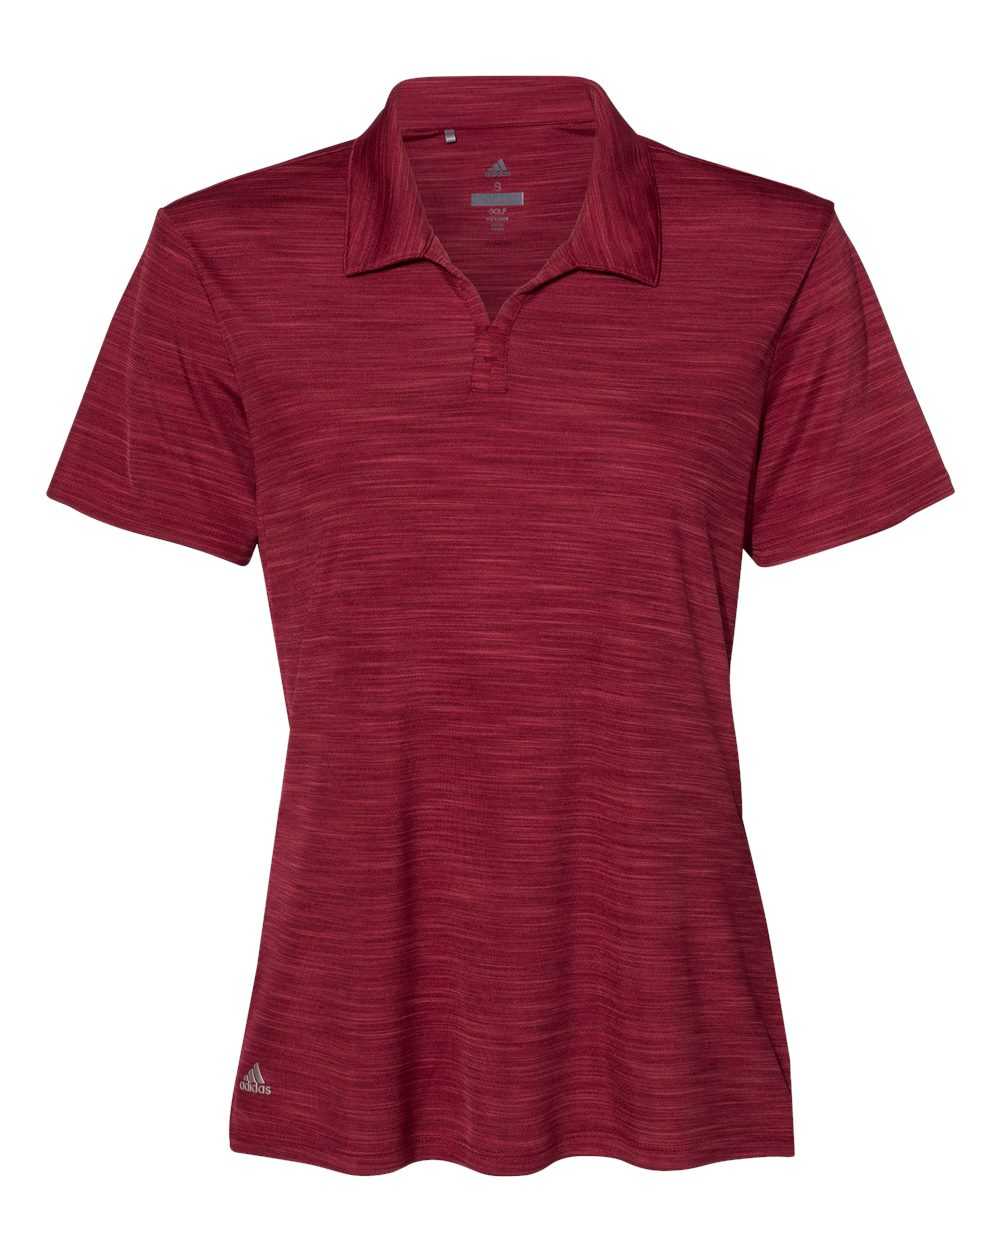 Reis krater Onderdrukking Adidas A403 Women's M??lange Sport Shirt - Collegiate Burgundy Melange